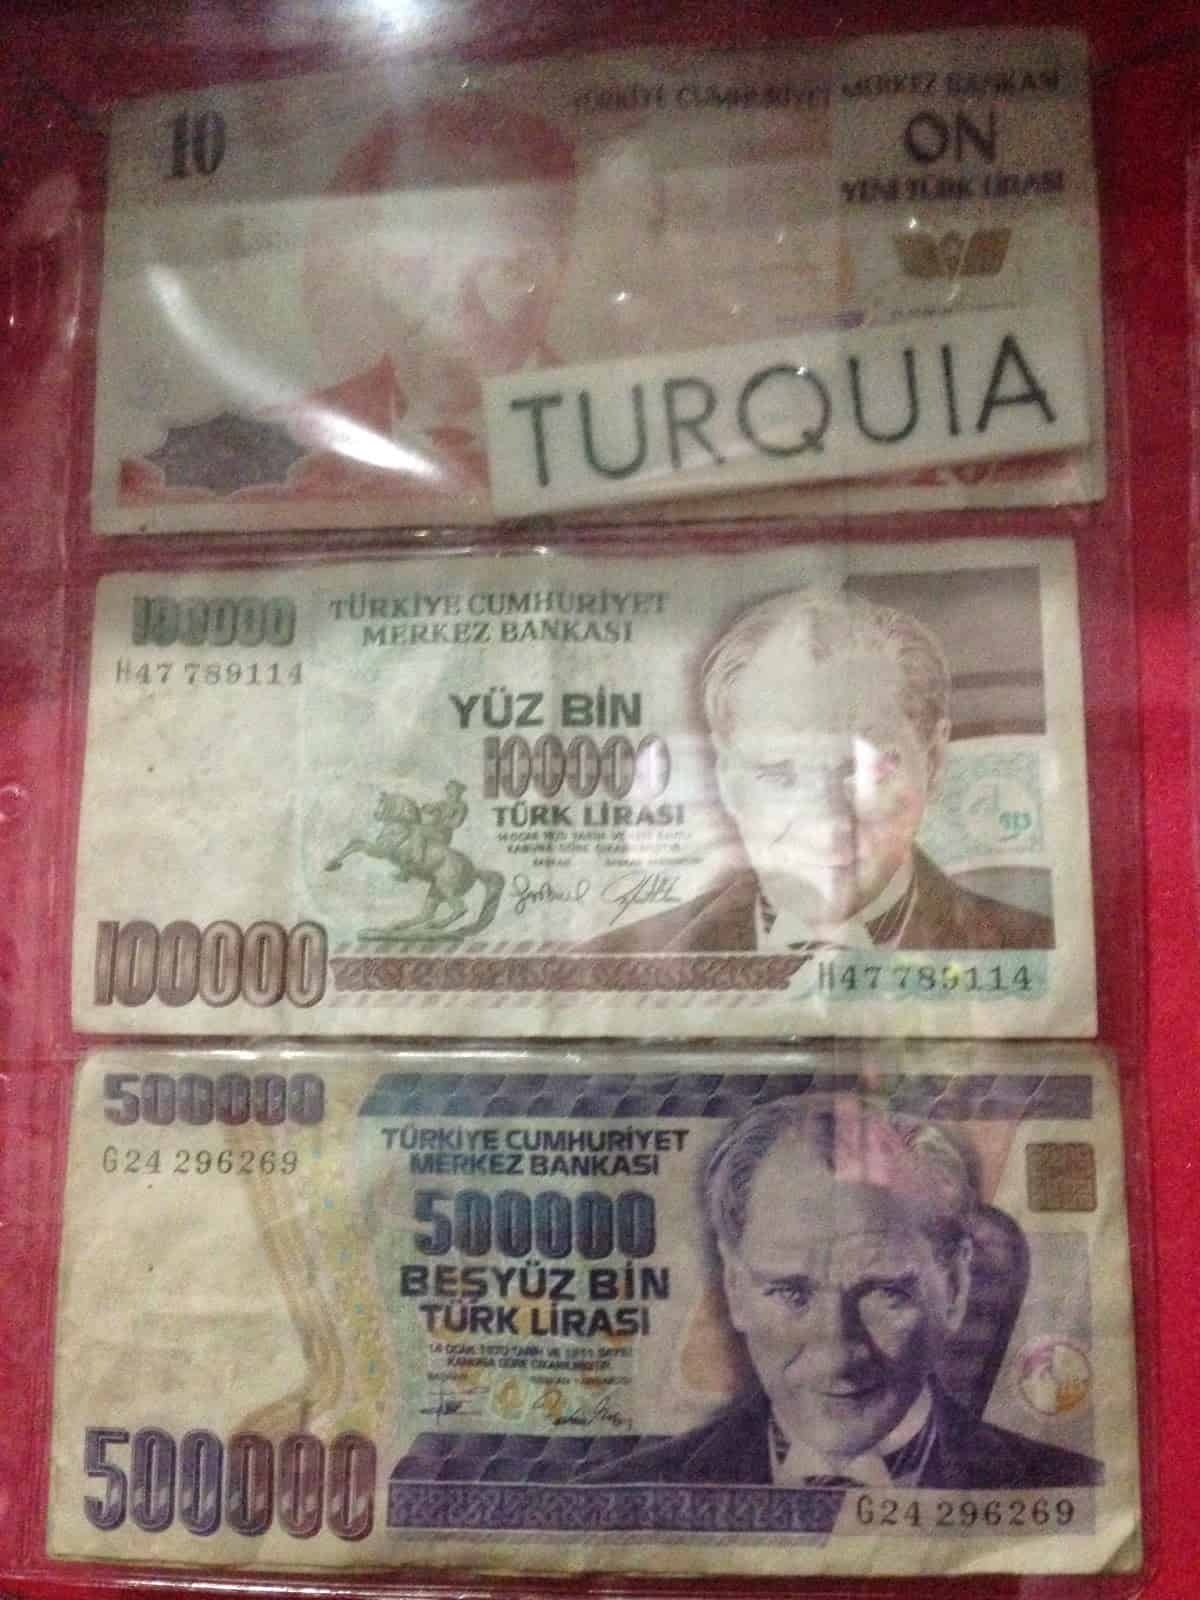 Bills from Turkey